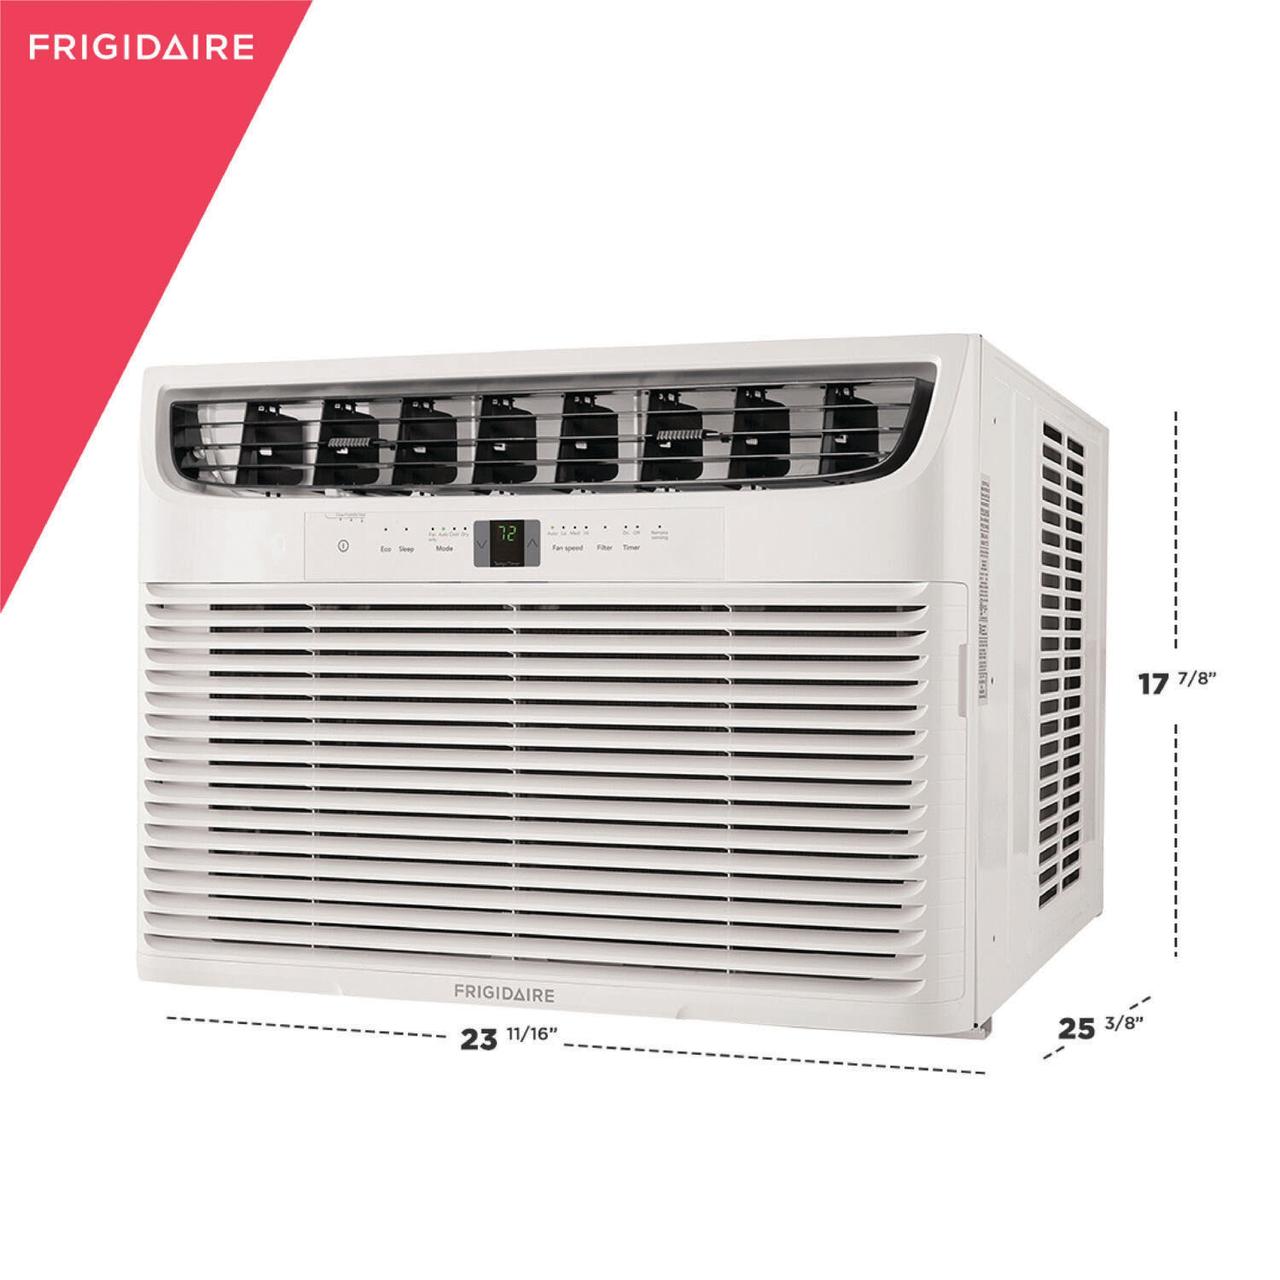 Frigidaire 15,100 BTU Window Air Conditioner with Remote in White - image 3 of 7